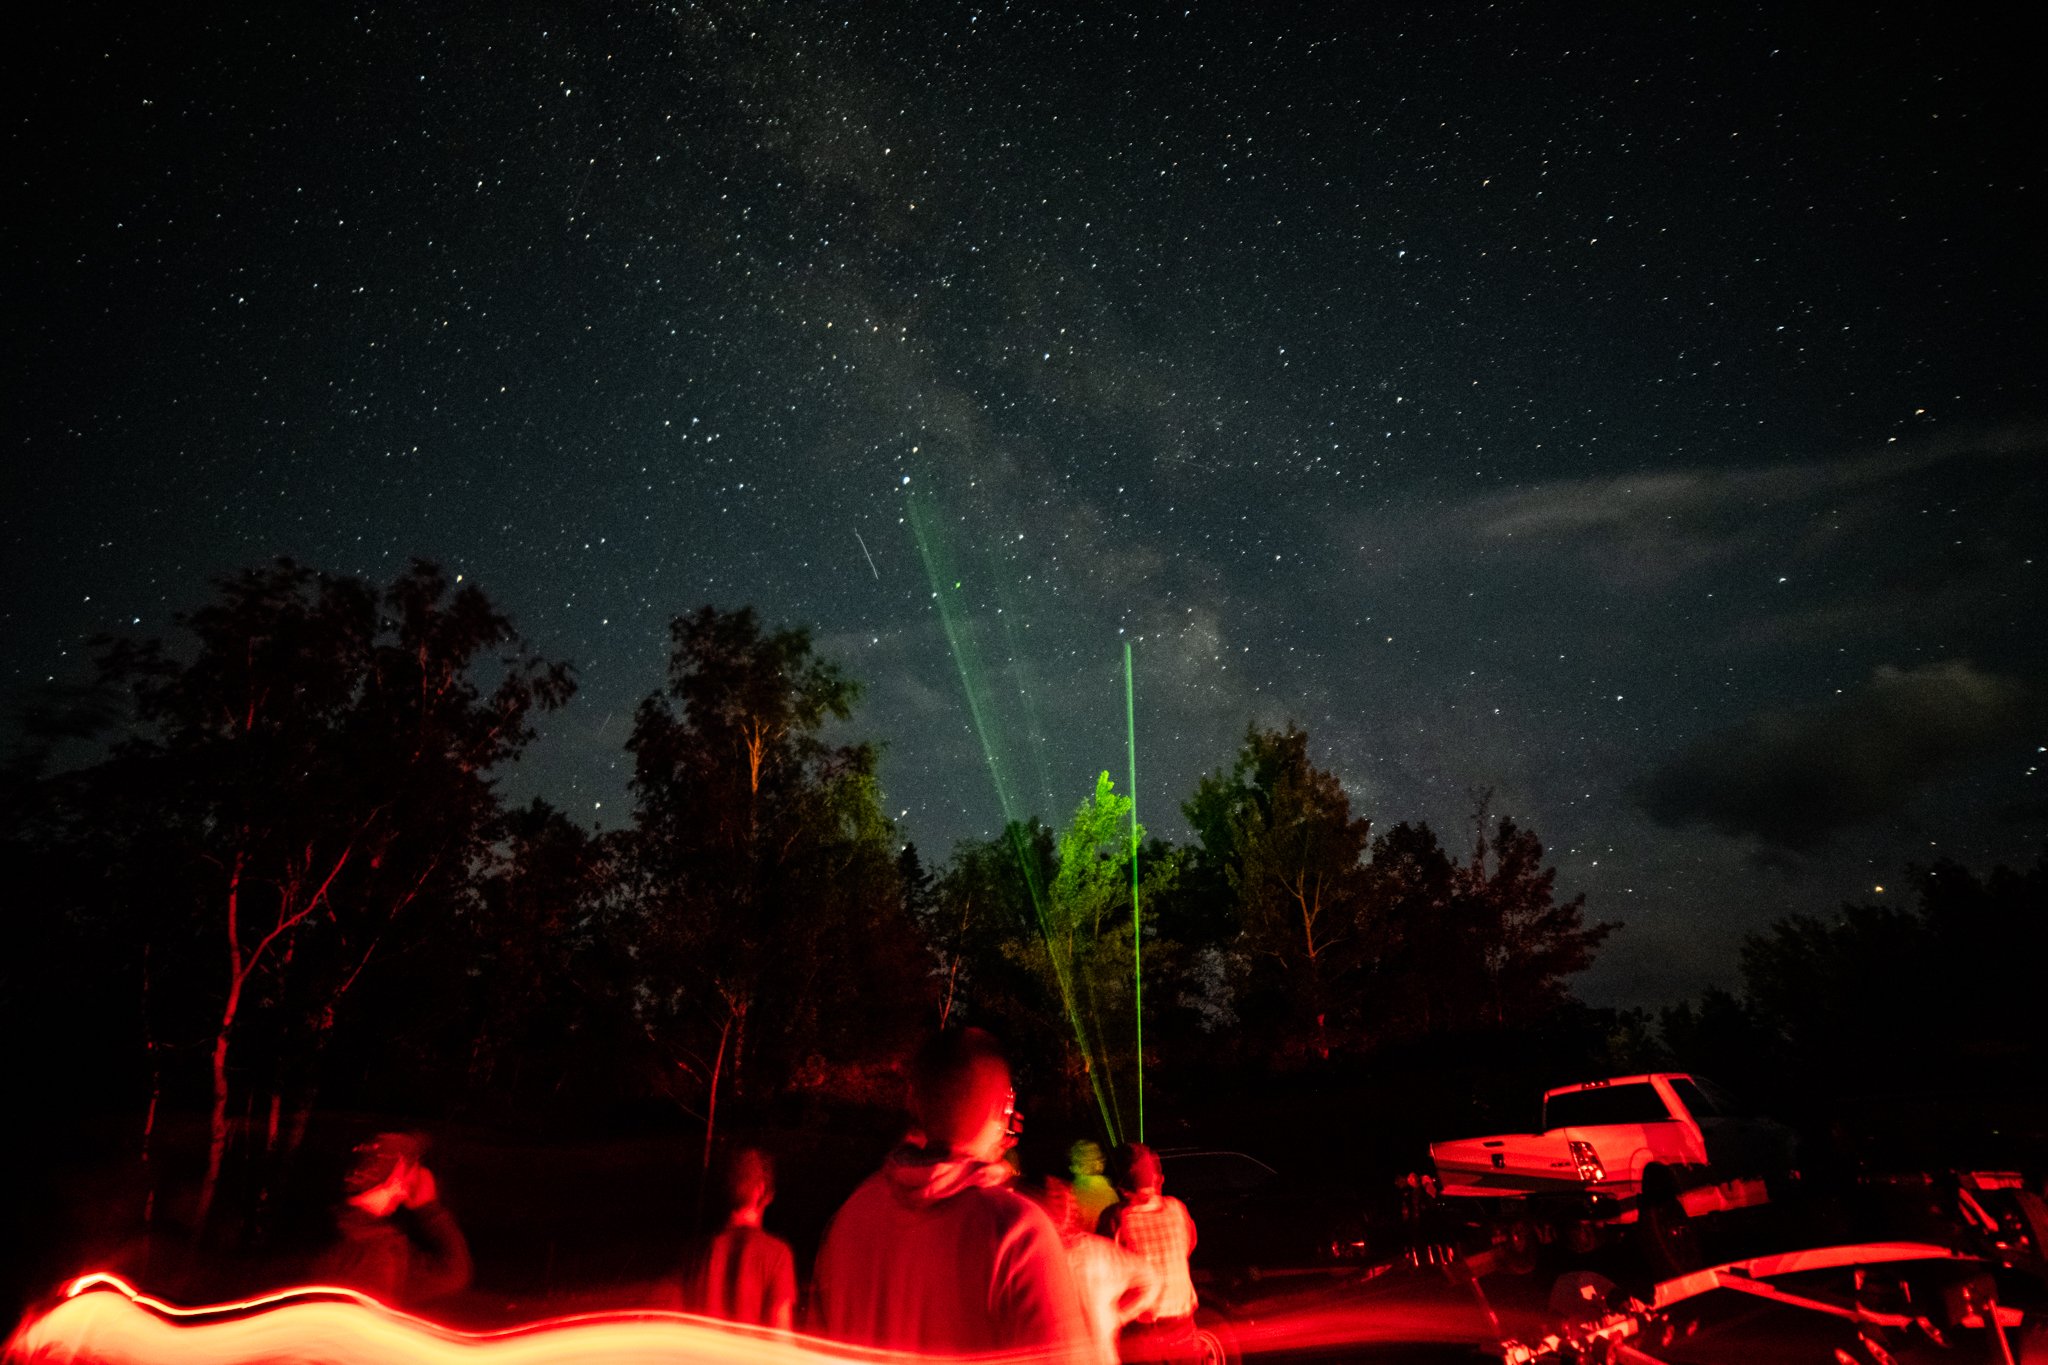 Dark Skies - Gordy Lindgren Star Party 2022 - Lasers and Constellations.jpg